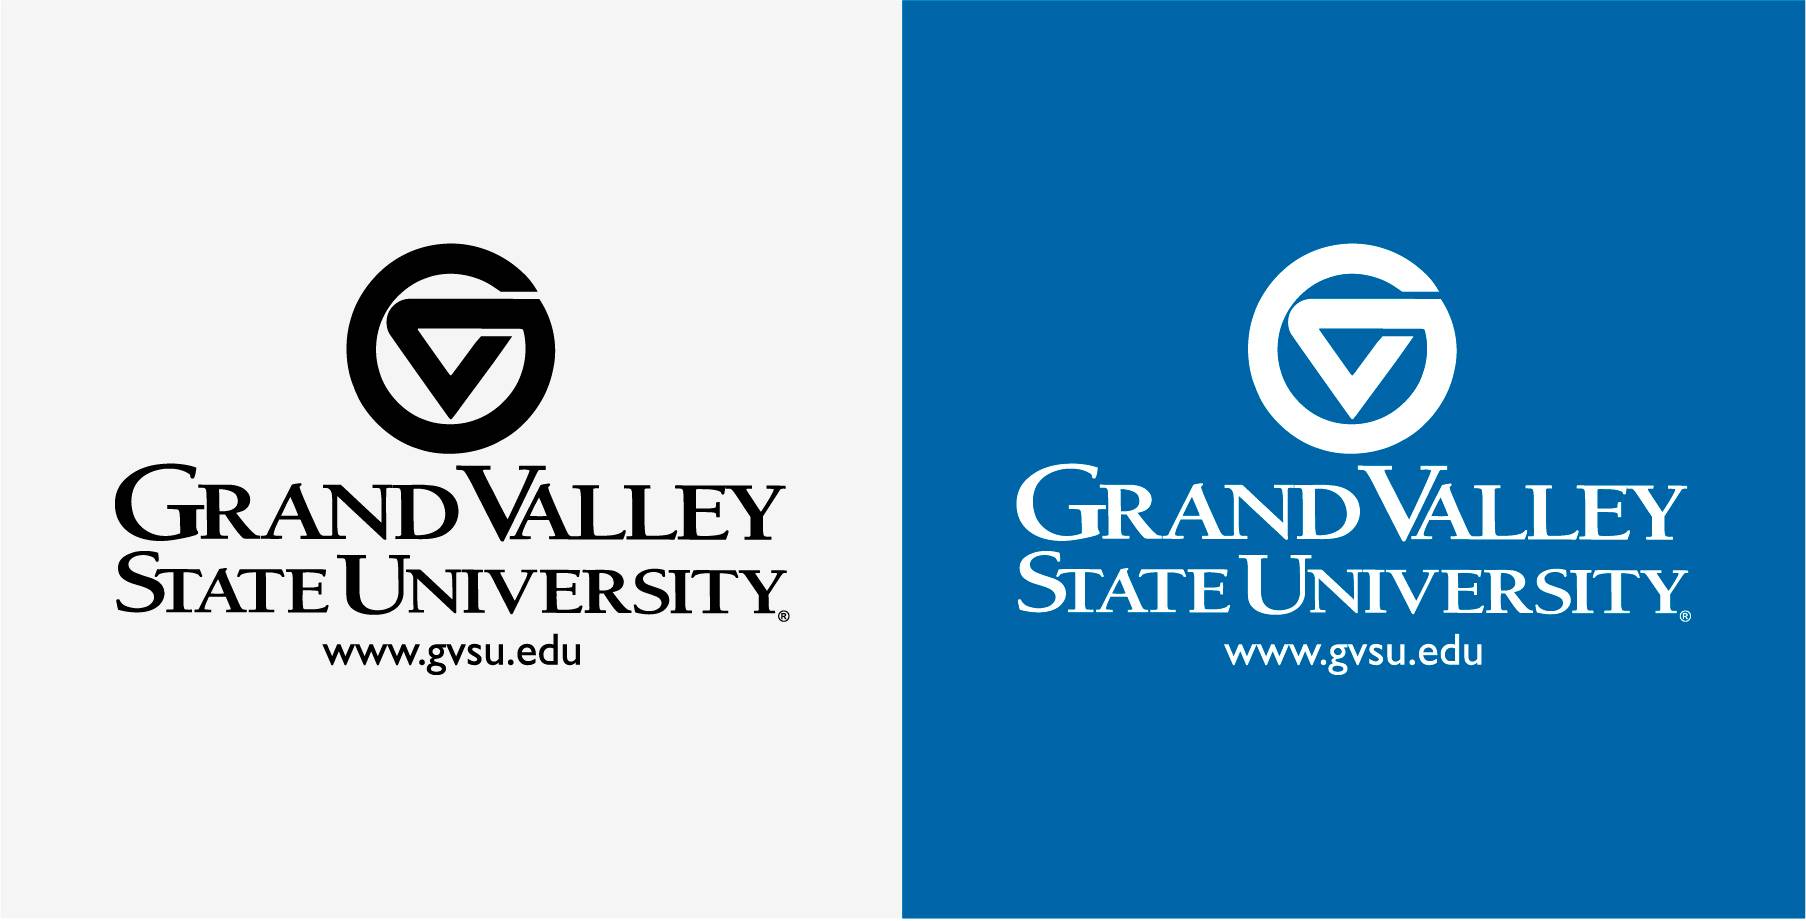 A white Grand Valley logo against a dark blue background and a black Grand Valley logo against a light grey background.